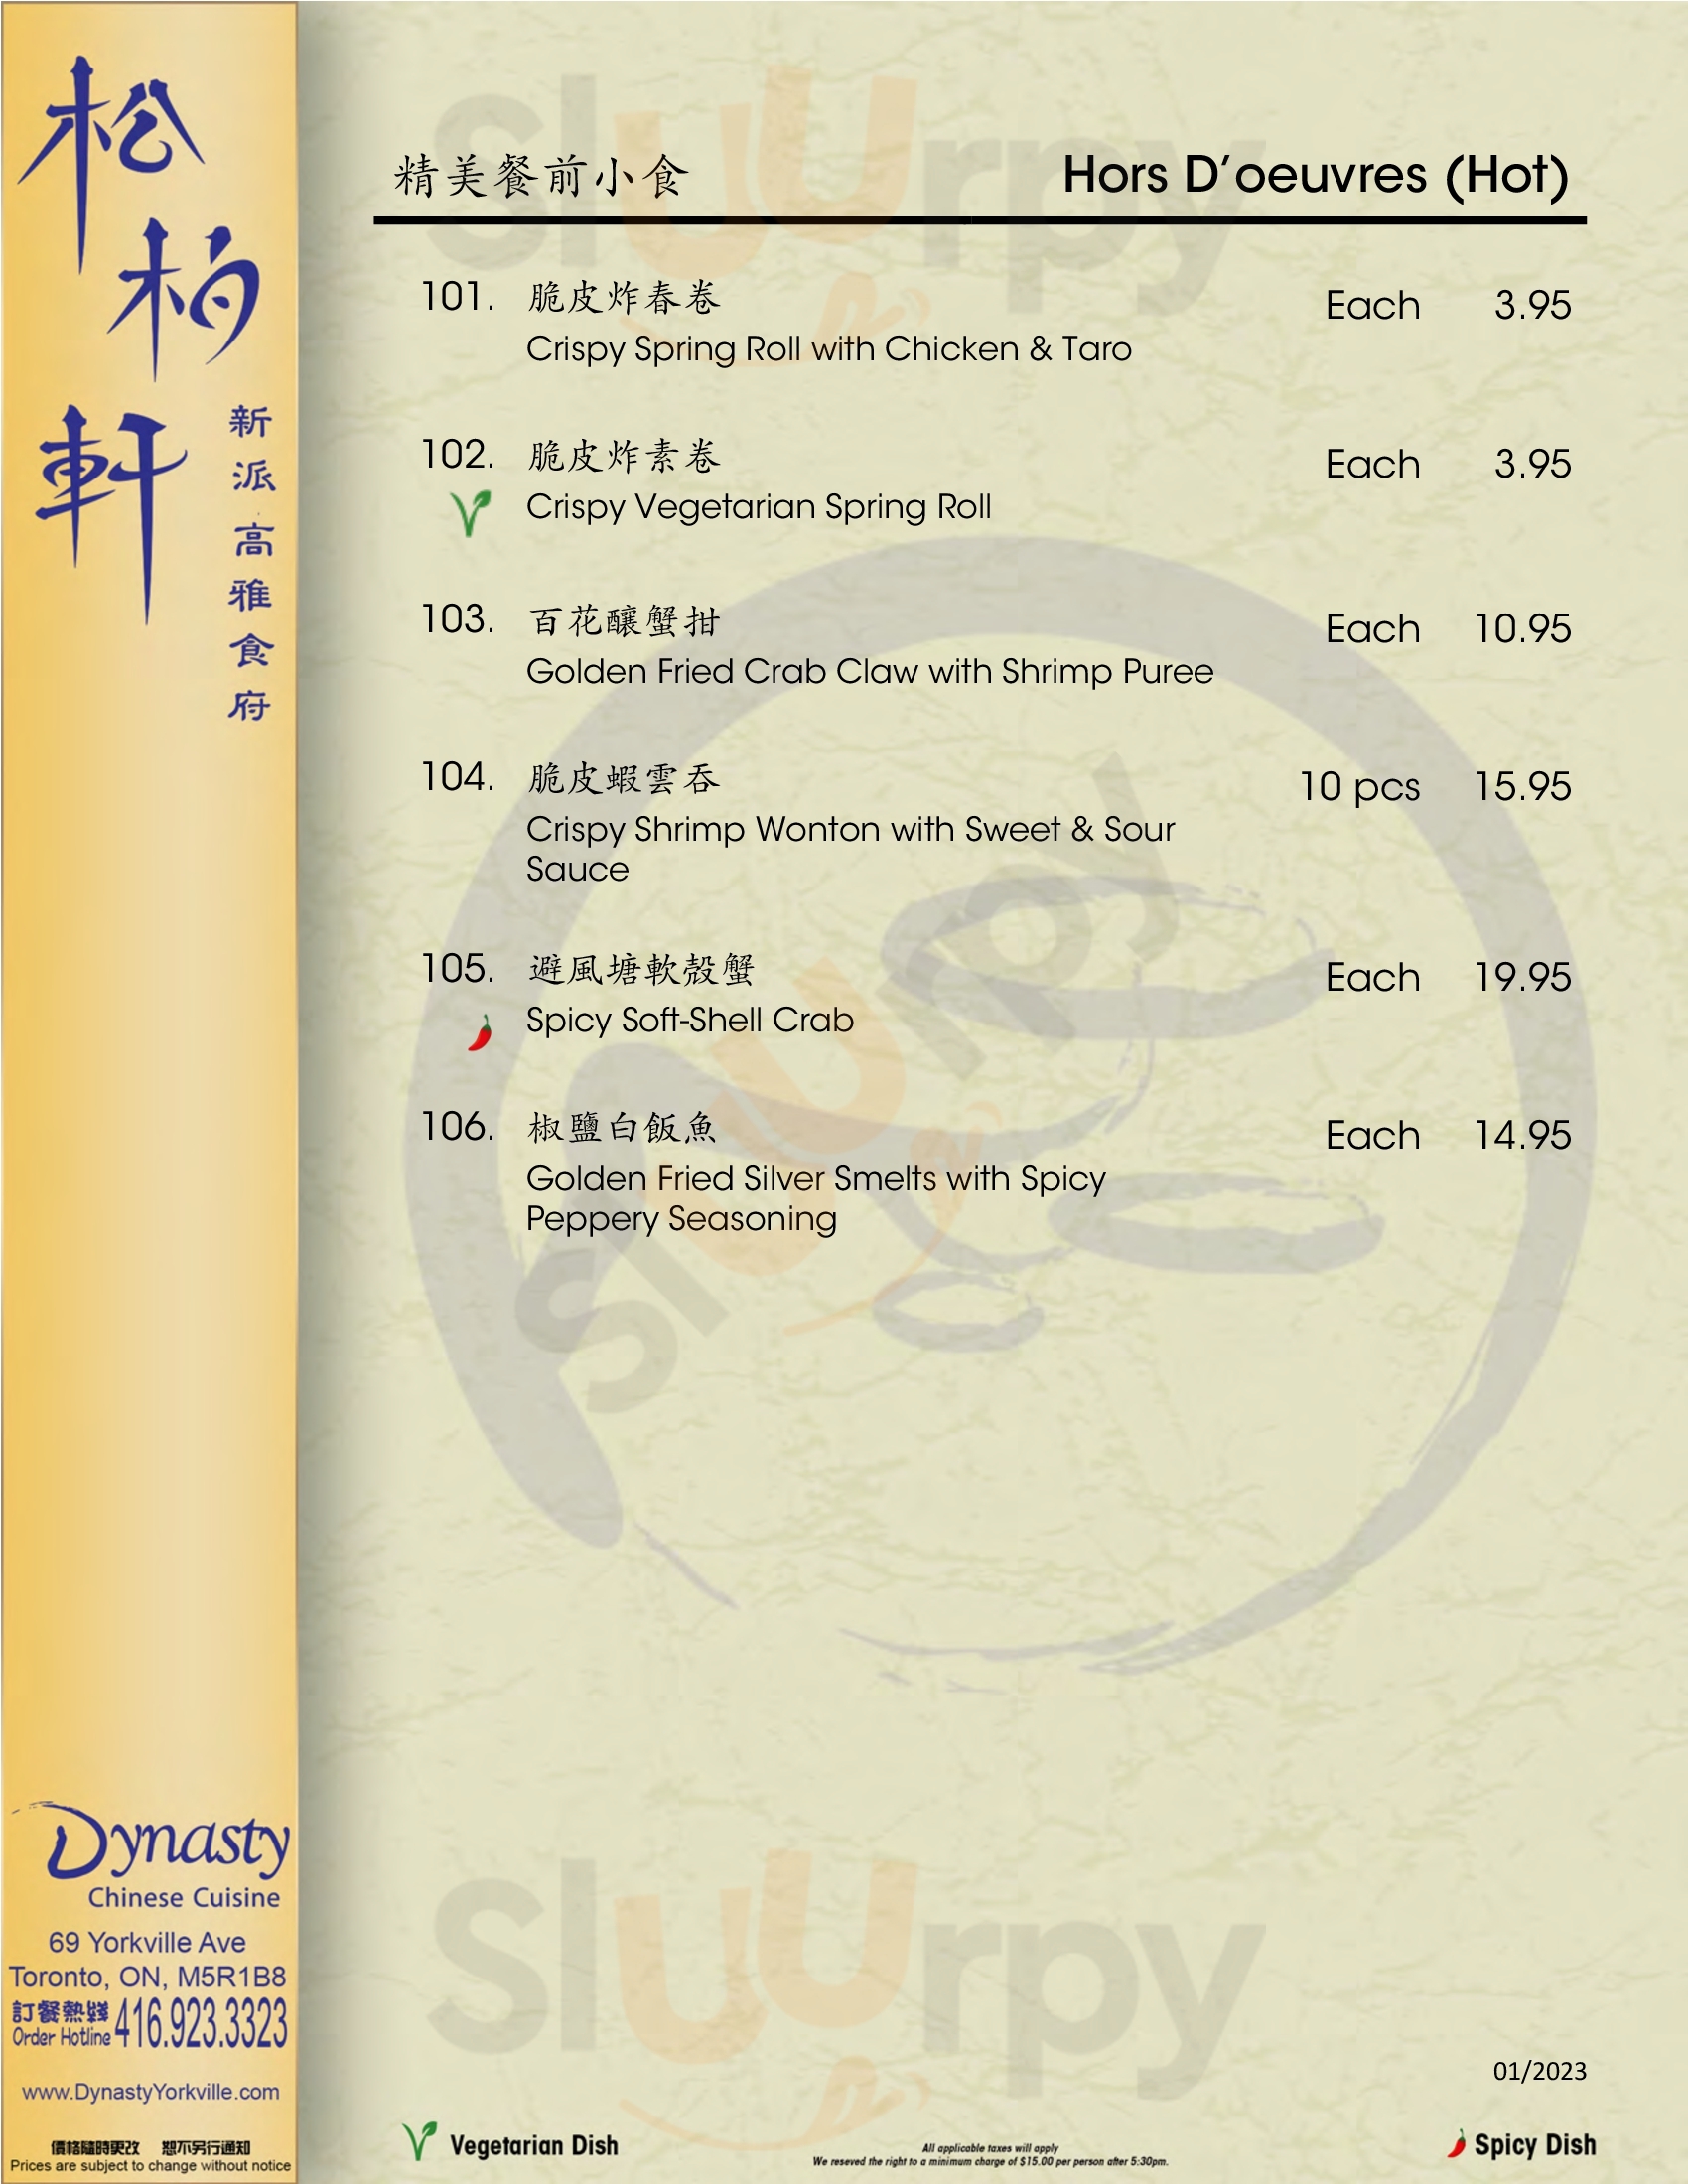 Dynasty Chinese Cuisine Toronto Menu - 1